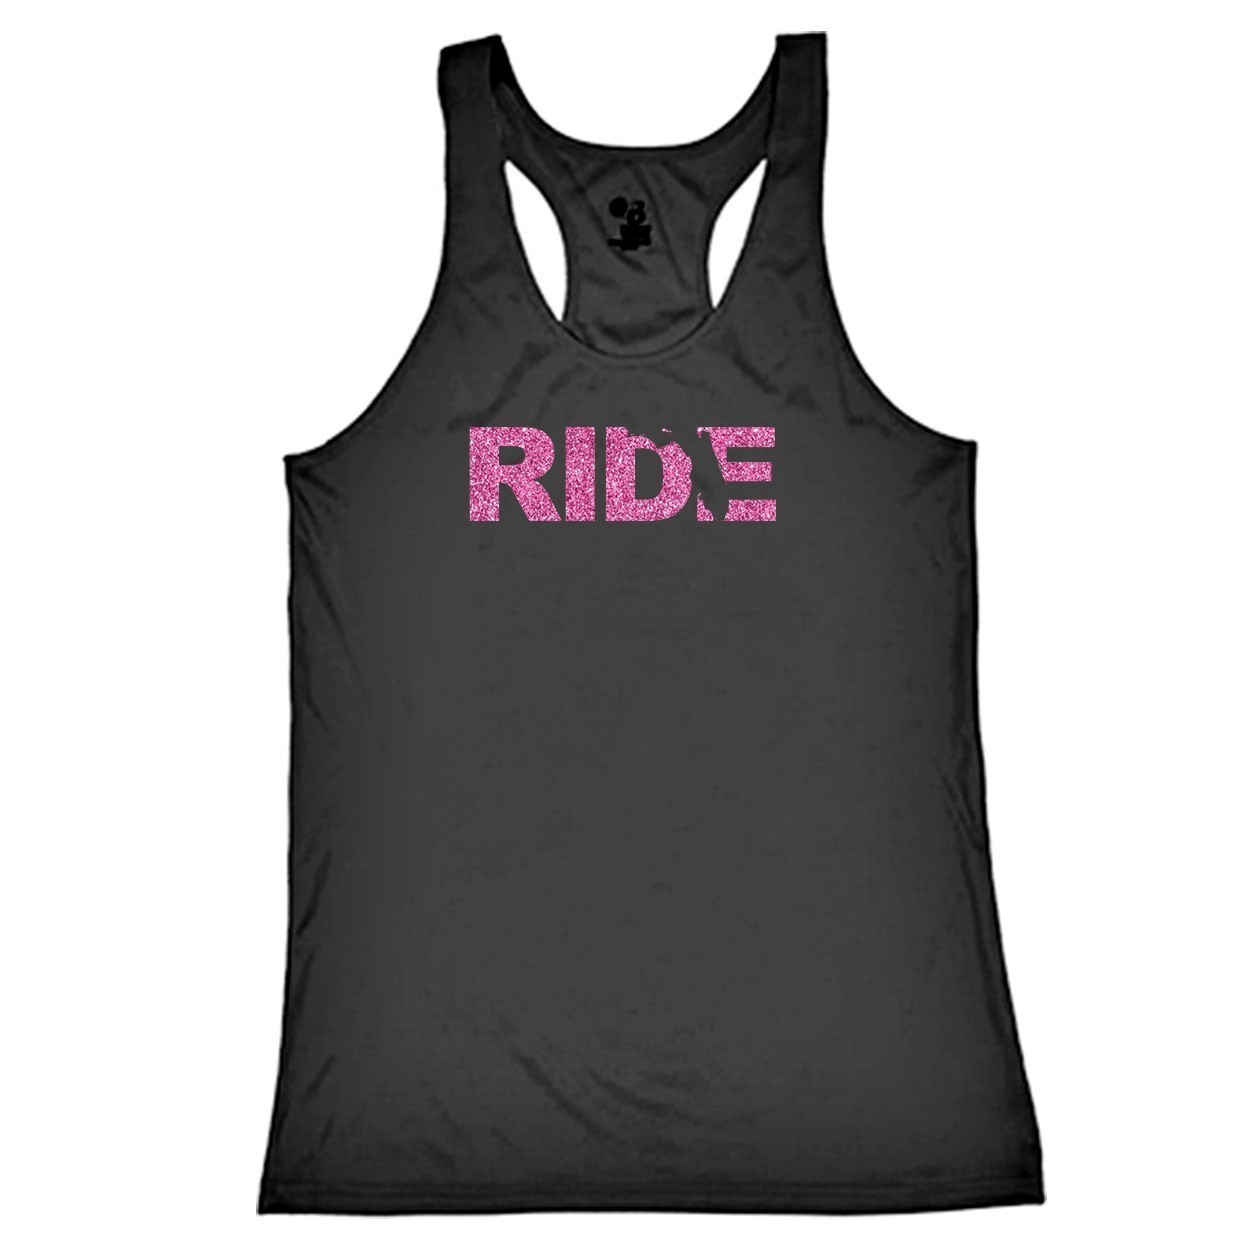 Ride Florida Classic Youth Girls Performance Racerback Tank Top Black (Glitter Pink Logo)